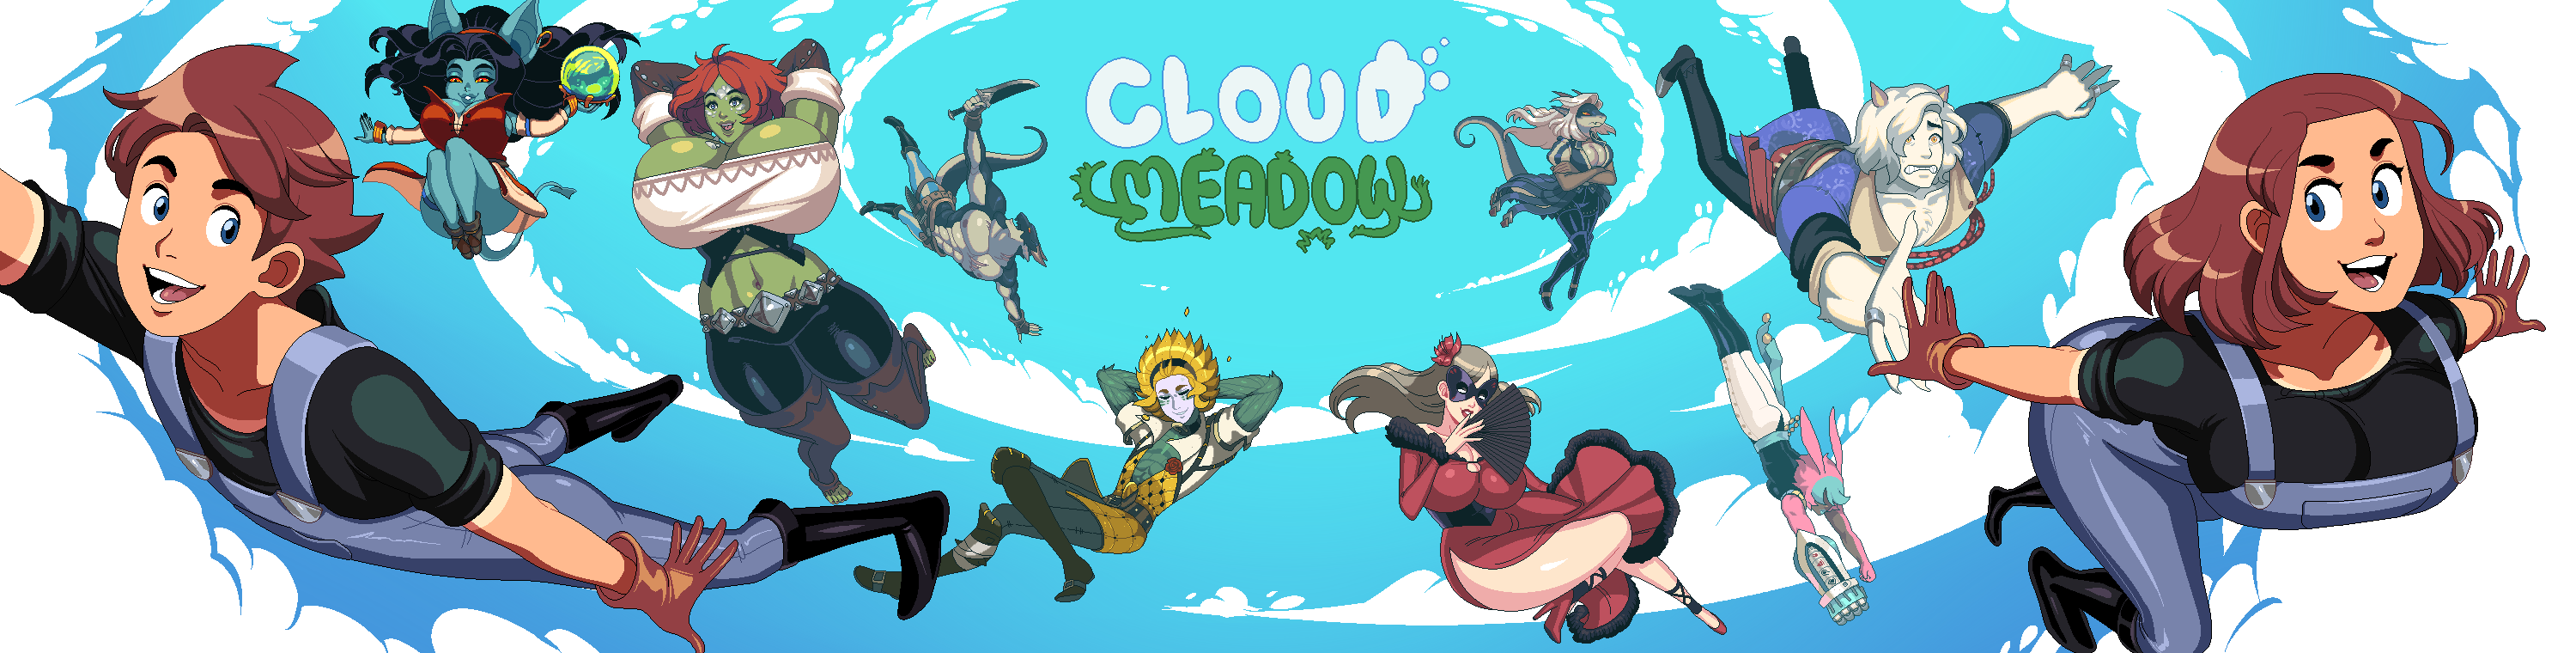 Cloud meadow free download